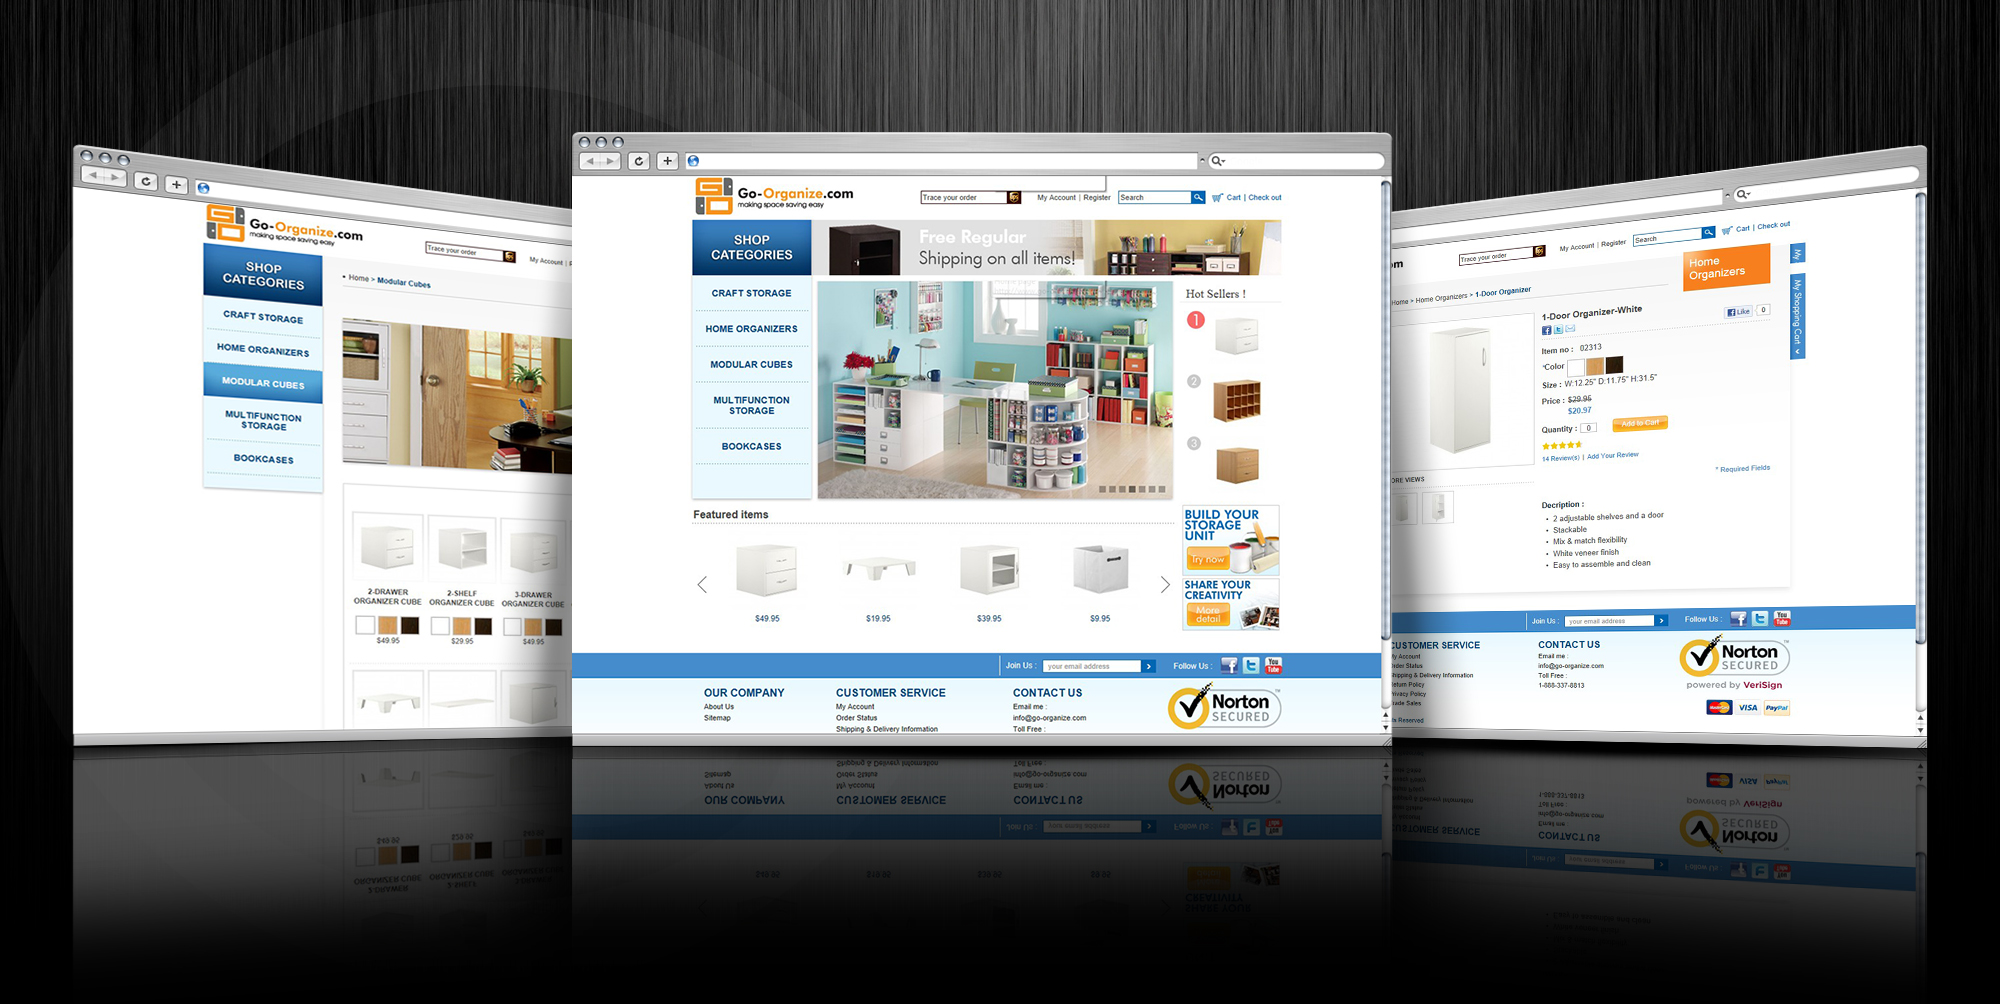 Go-organize - Web Design with Online Shop &CMS system development